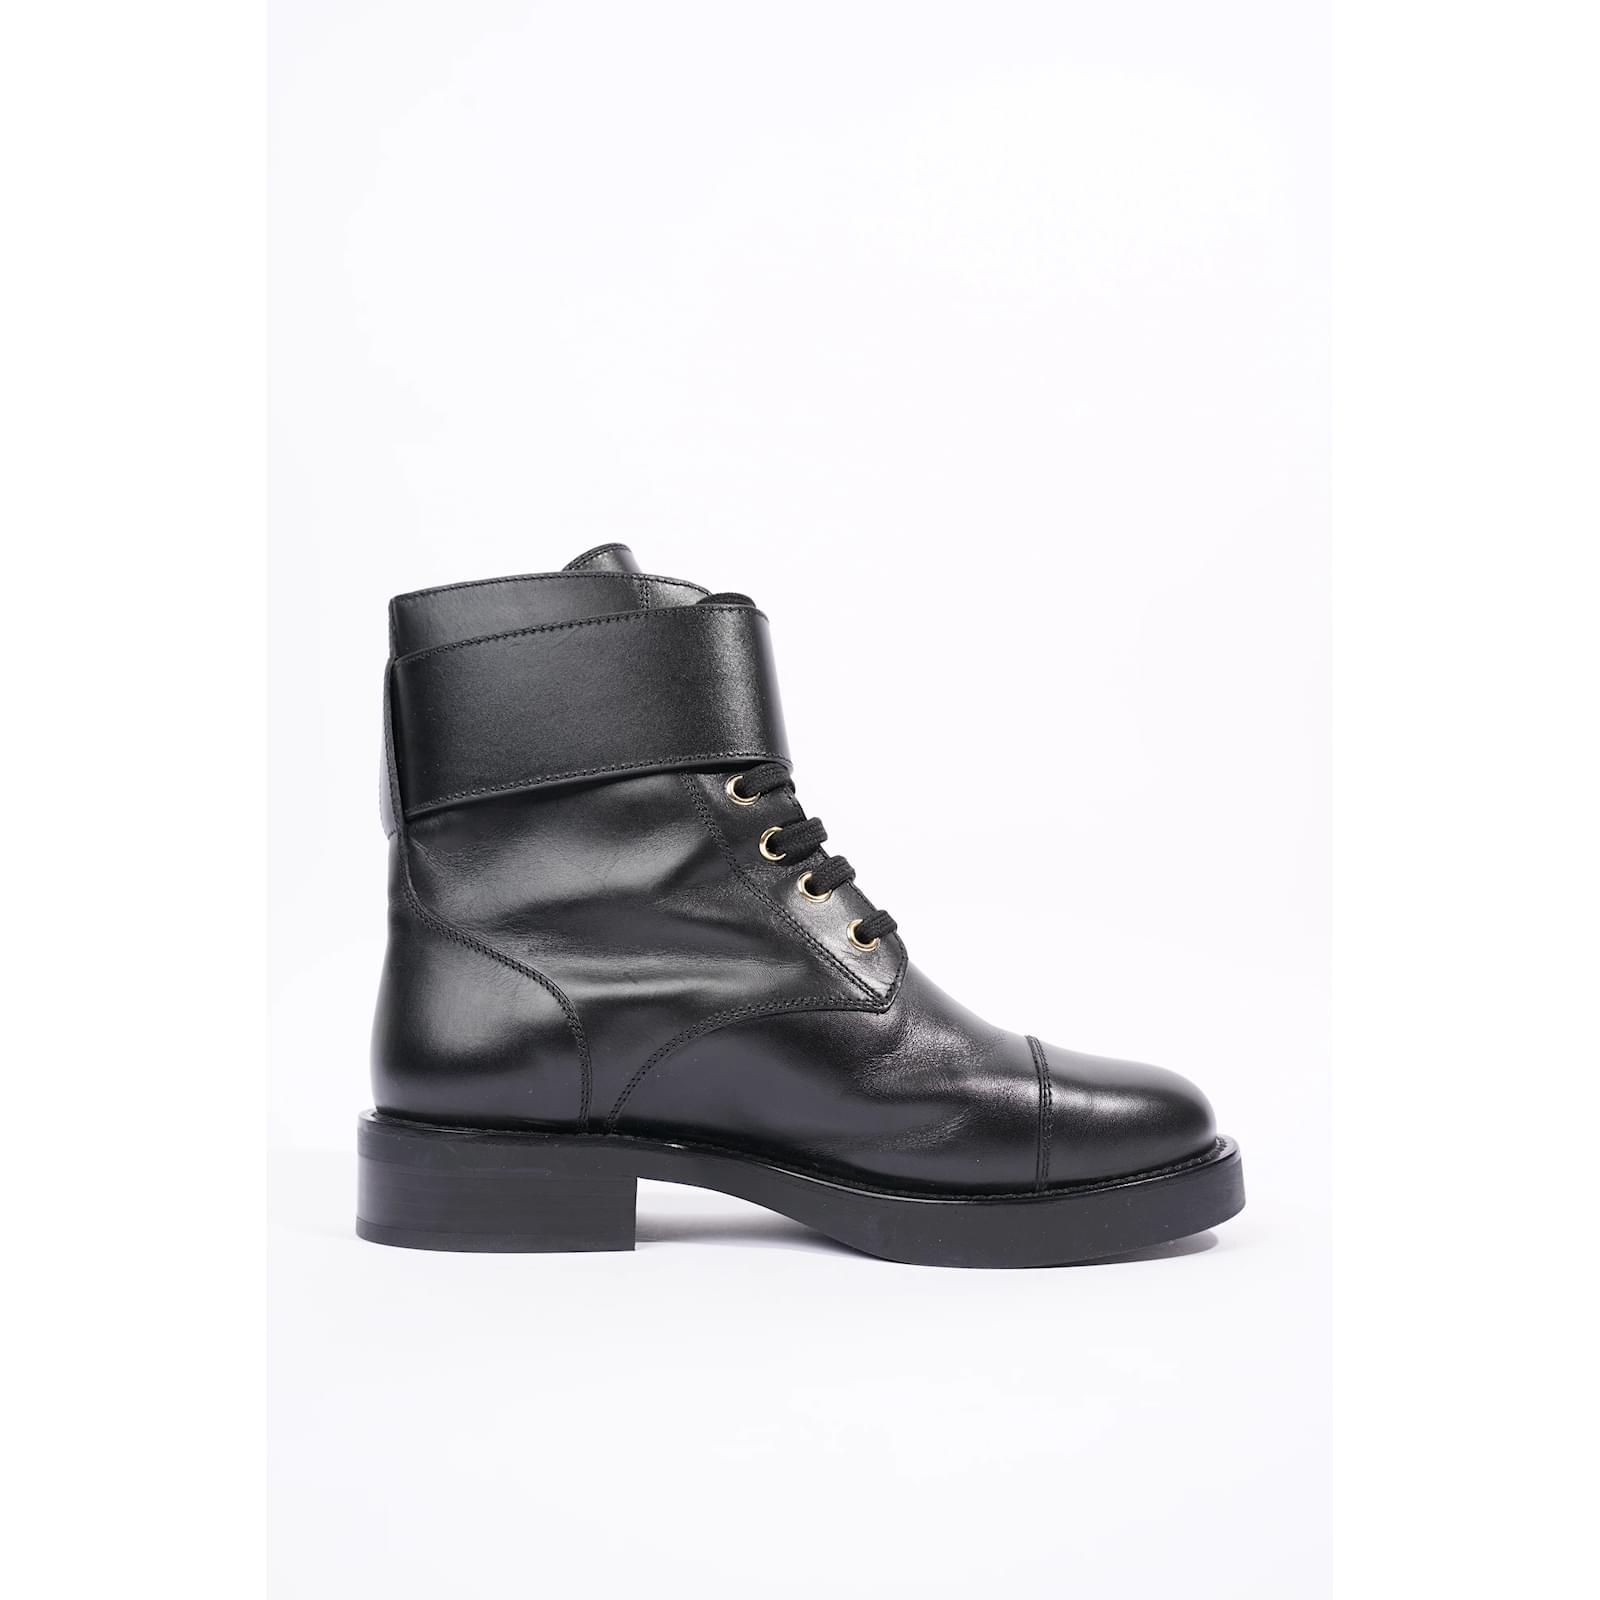 Wonderland leather lace up boots Louis Vuitton Black size 36 EU in